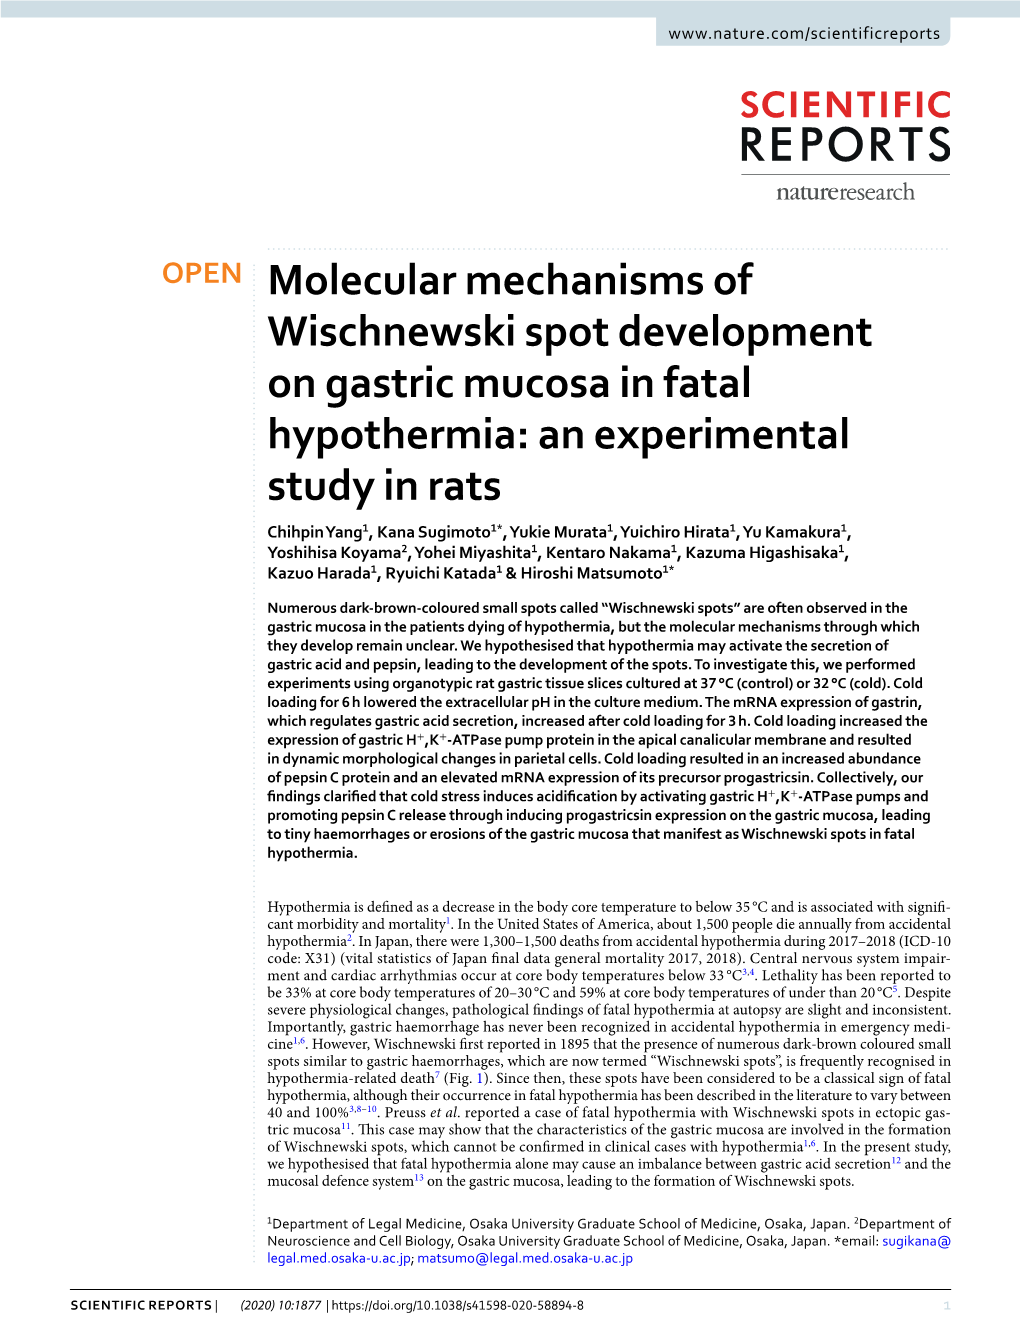 Molecular Mechanisms of Wischnewski Spot